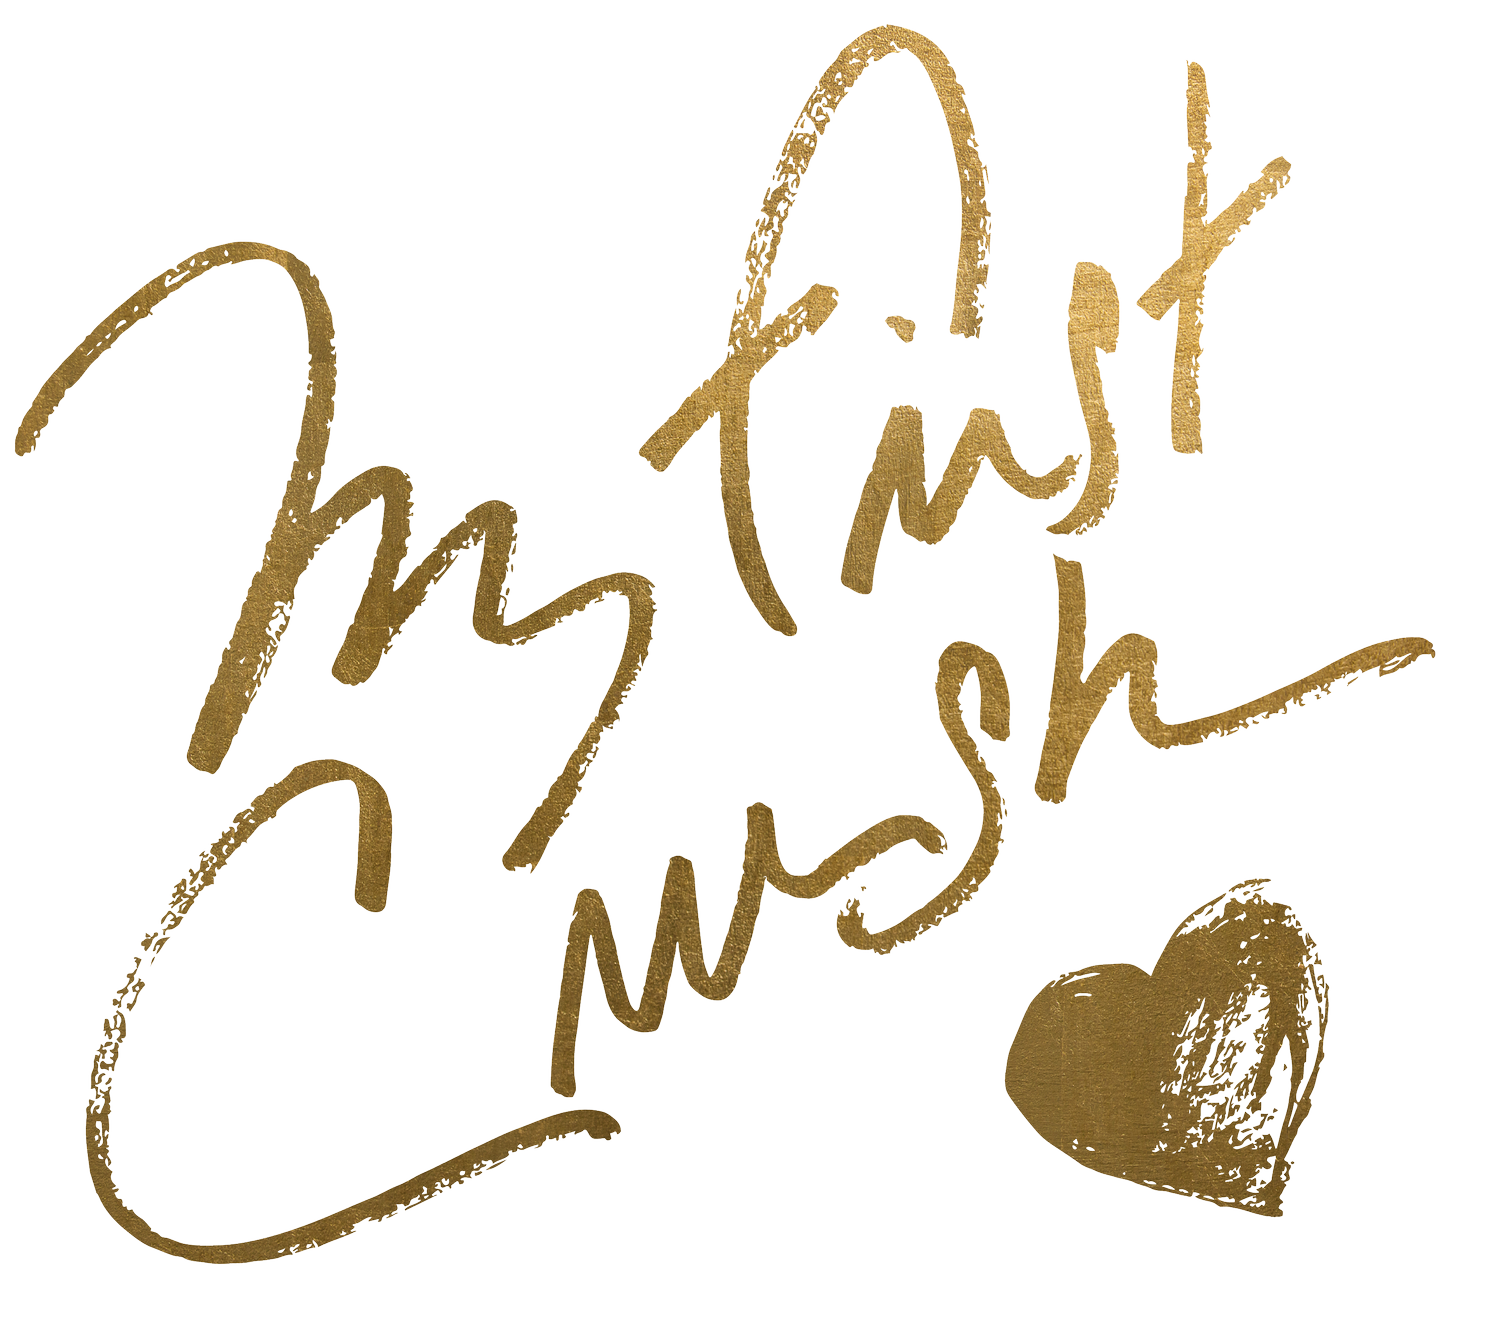 my first crush